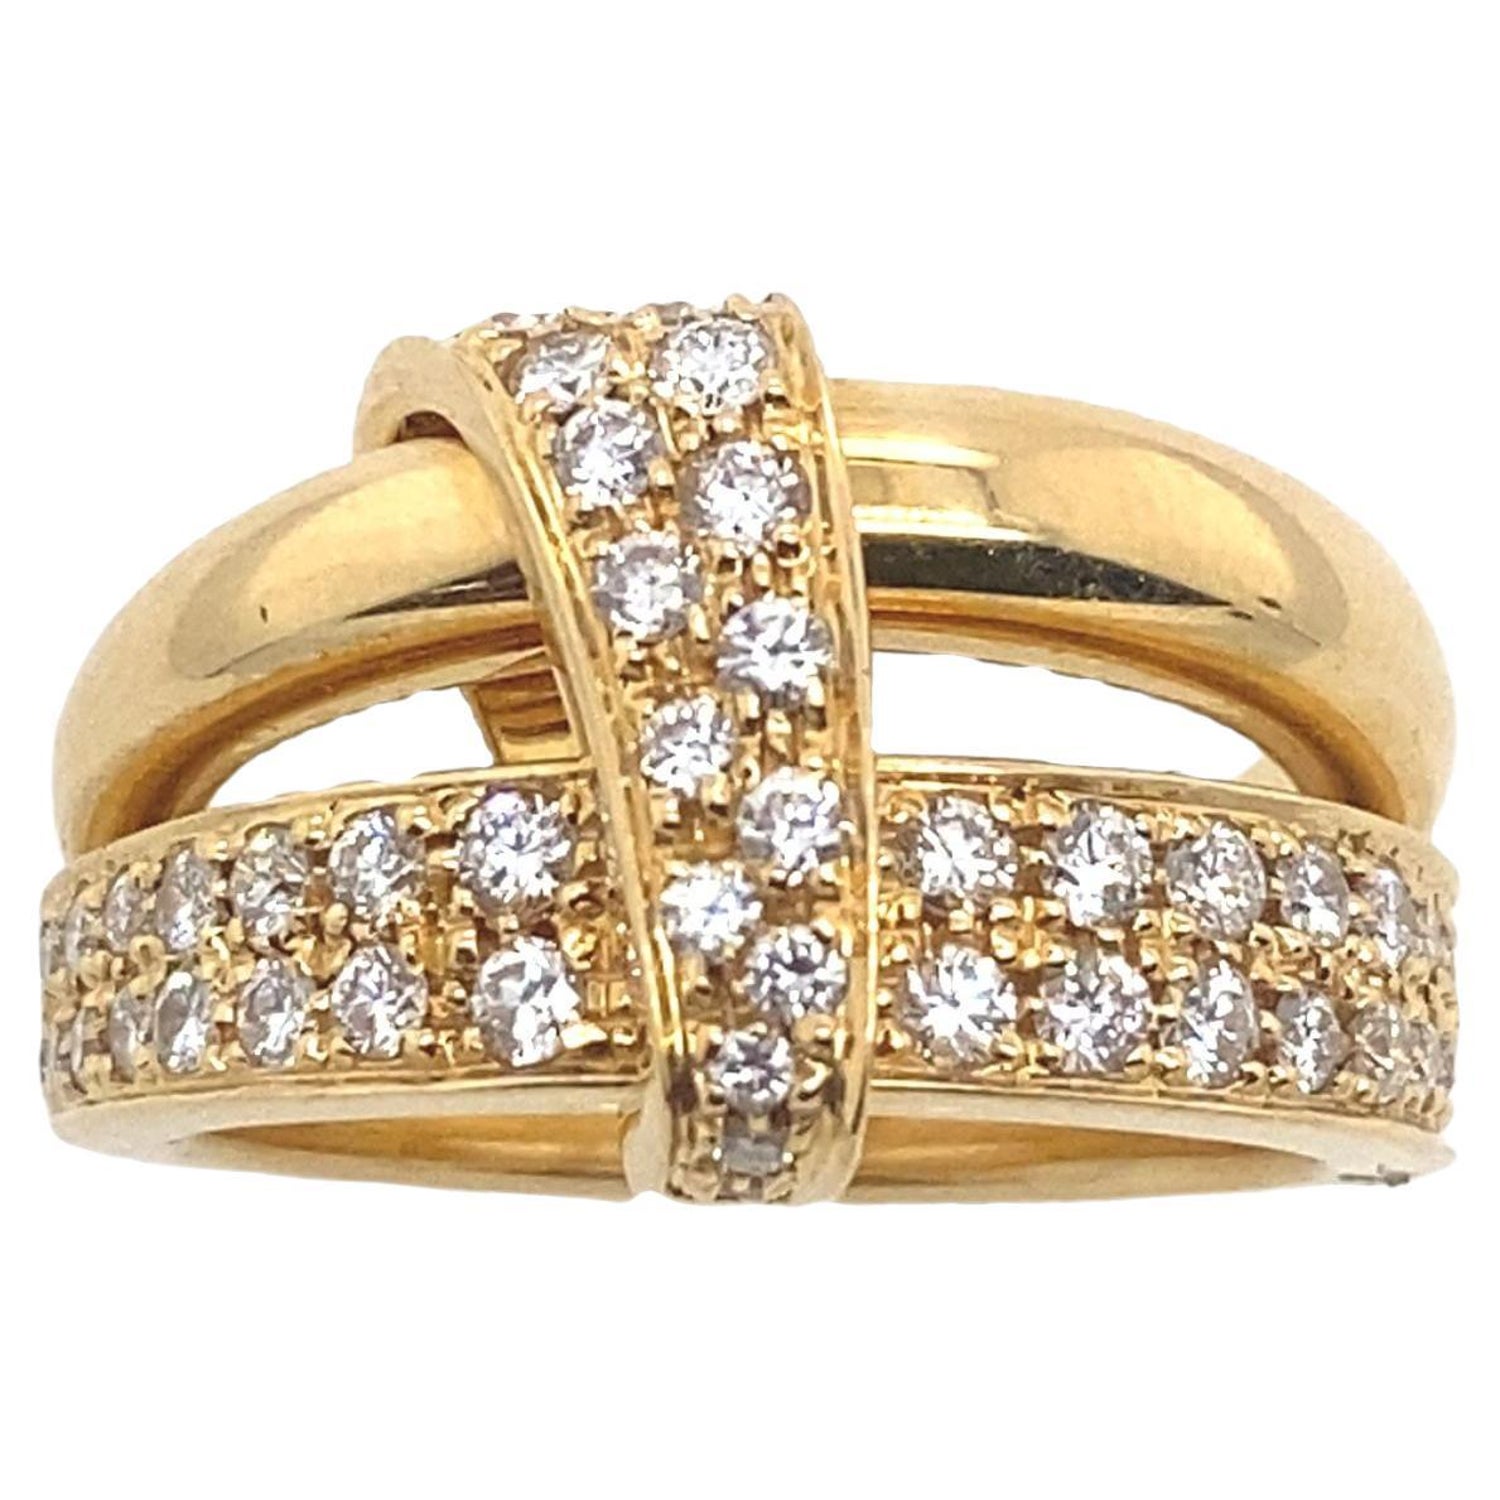 Auction: 18 Karat Yellow Gold Key Ring, Asprey of London